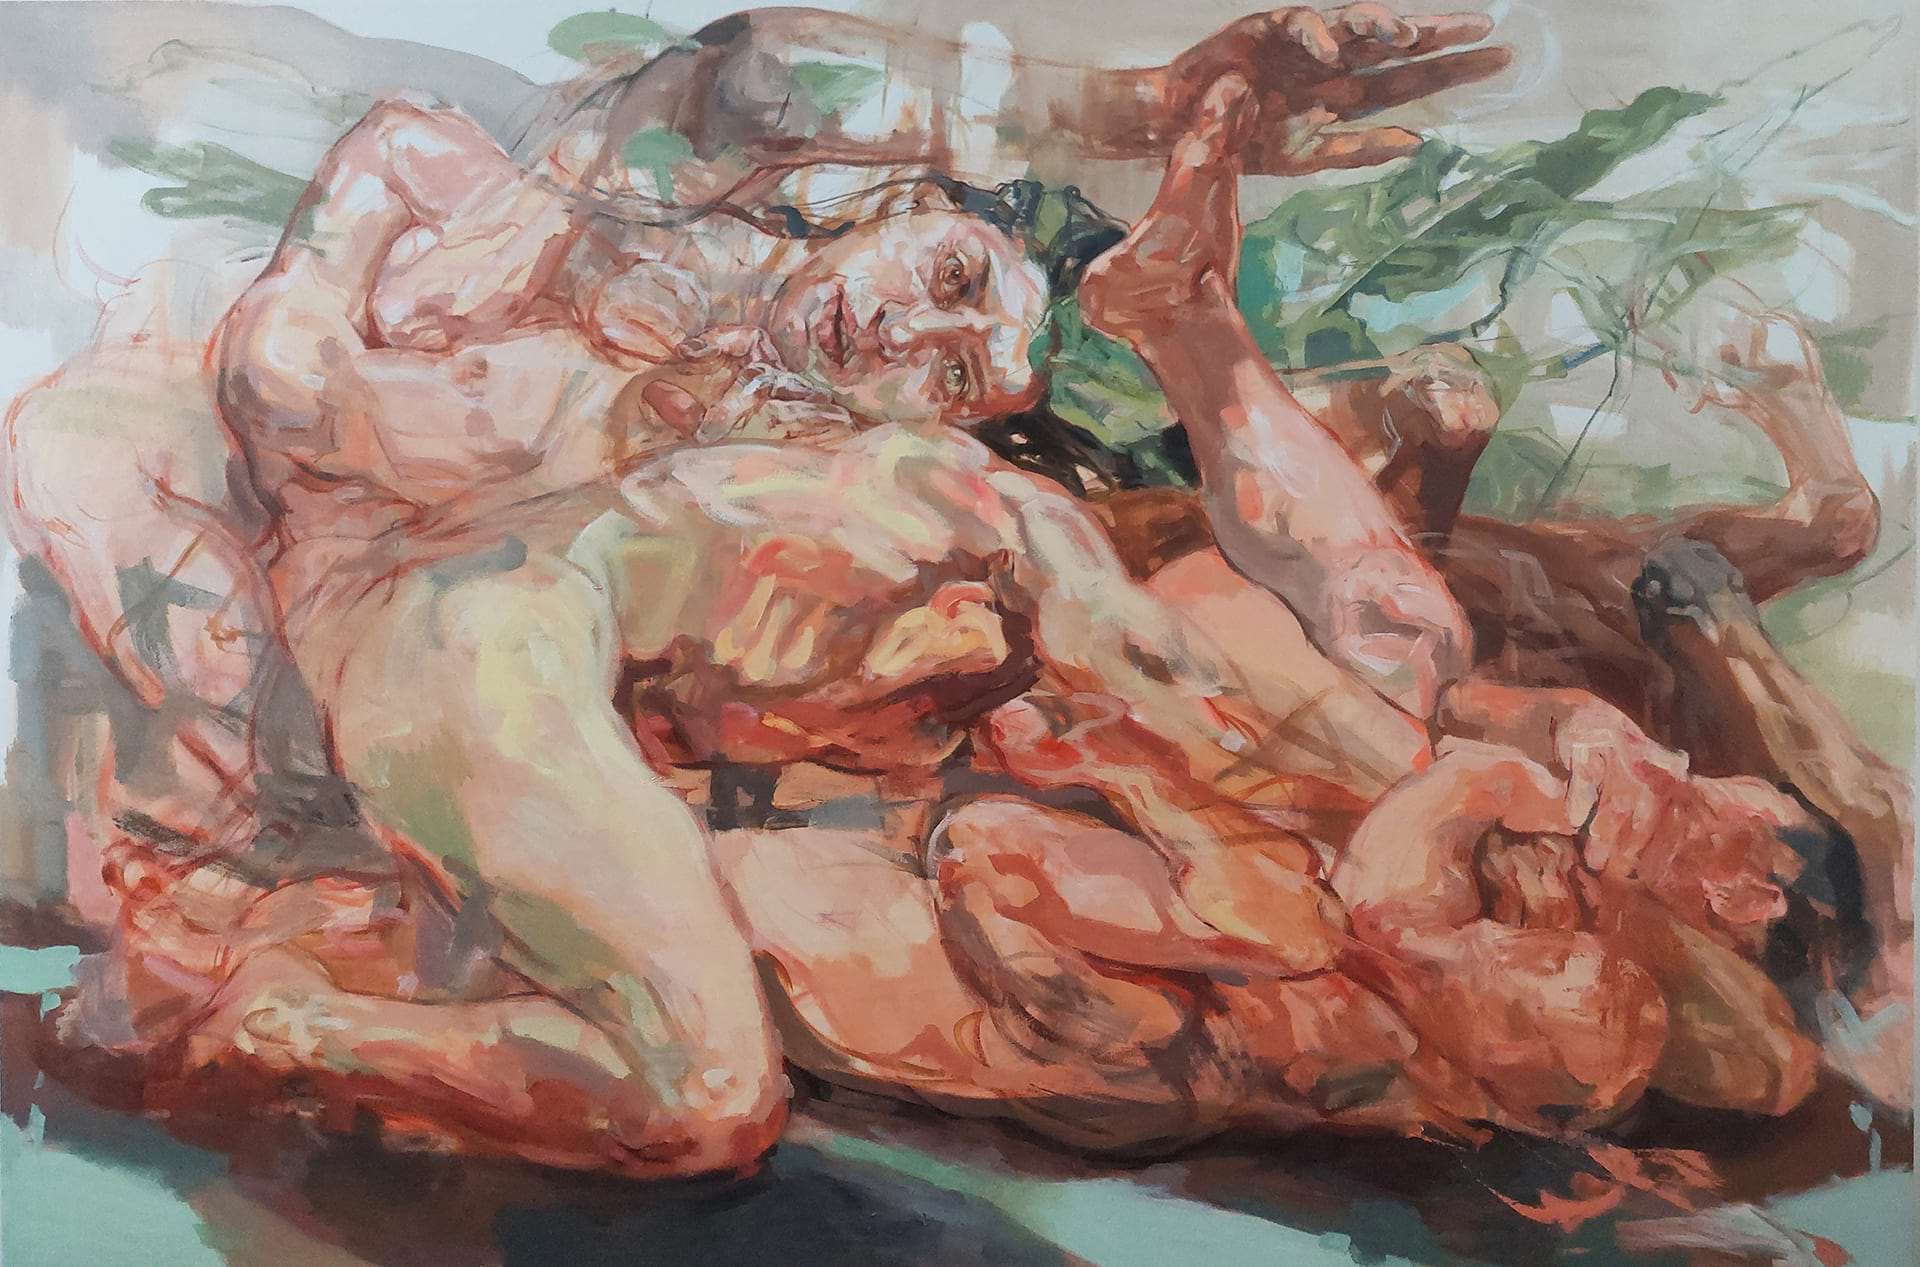 Sema Maşkılı, Breathing the Violence - Şiddeti Solumak. 2022 Oil on canvas 130x195cm